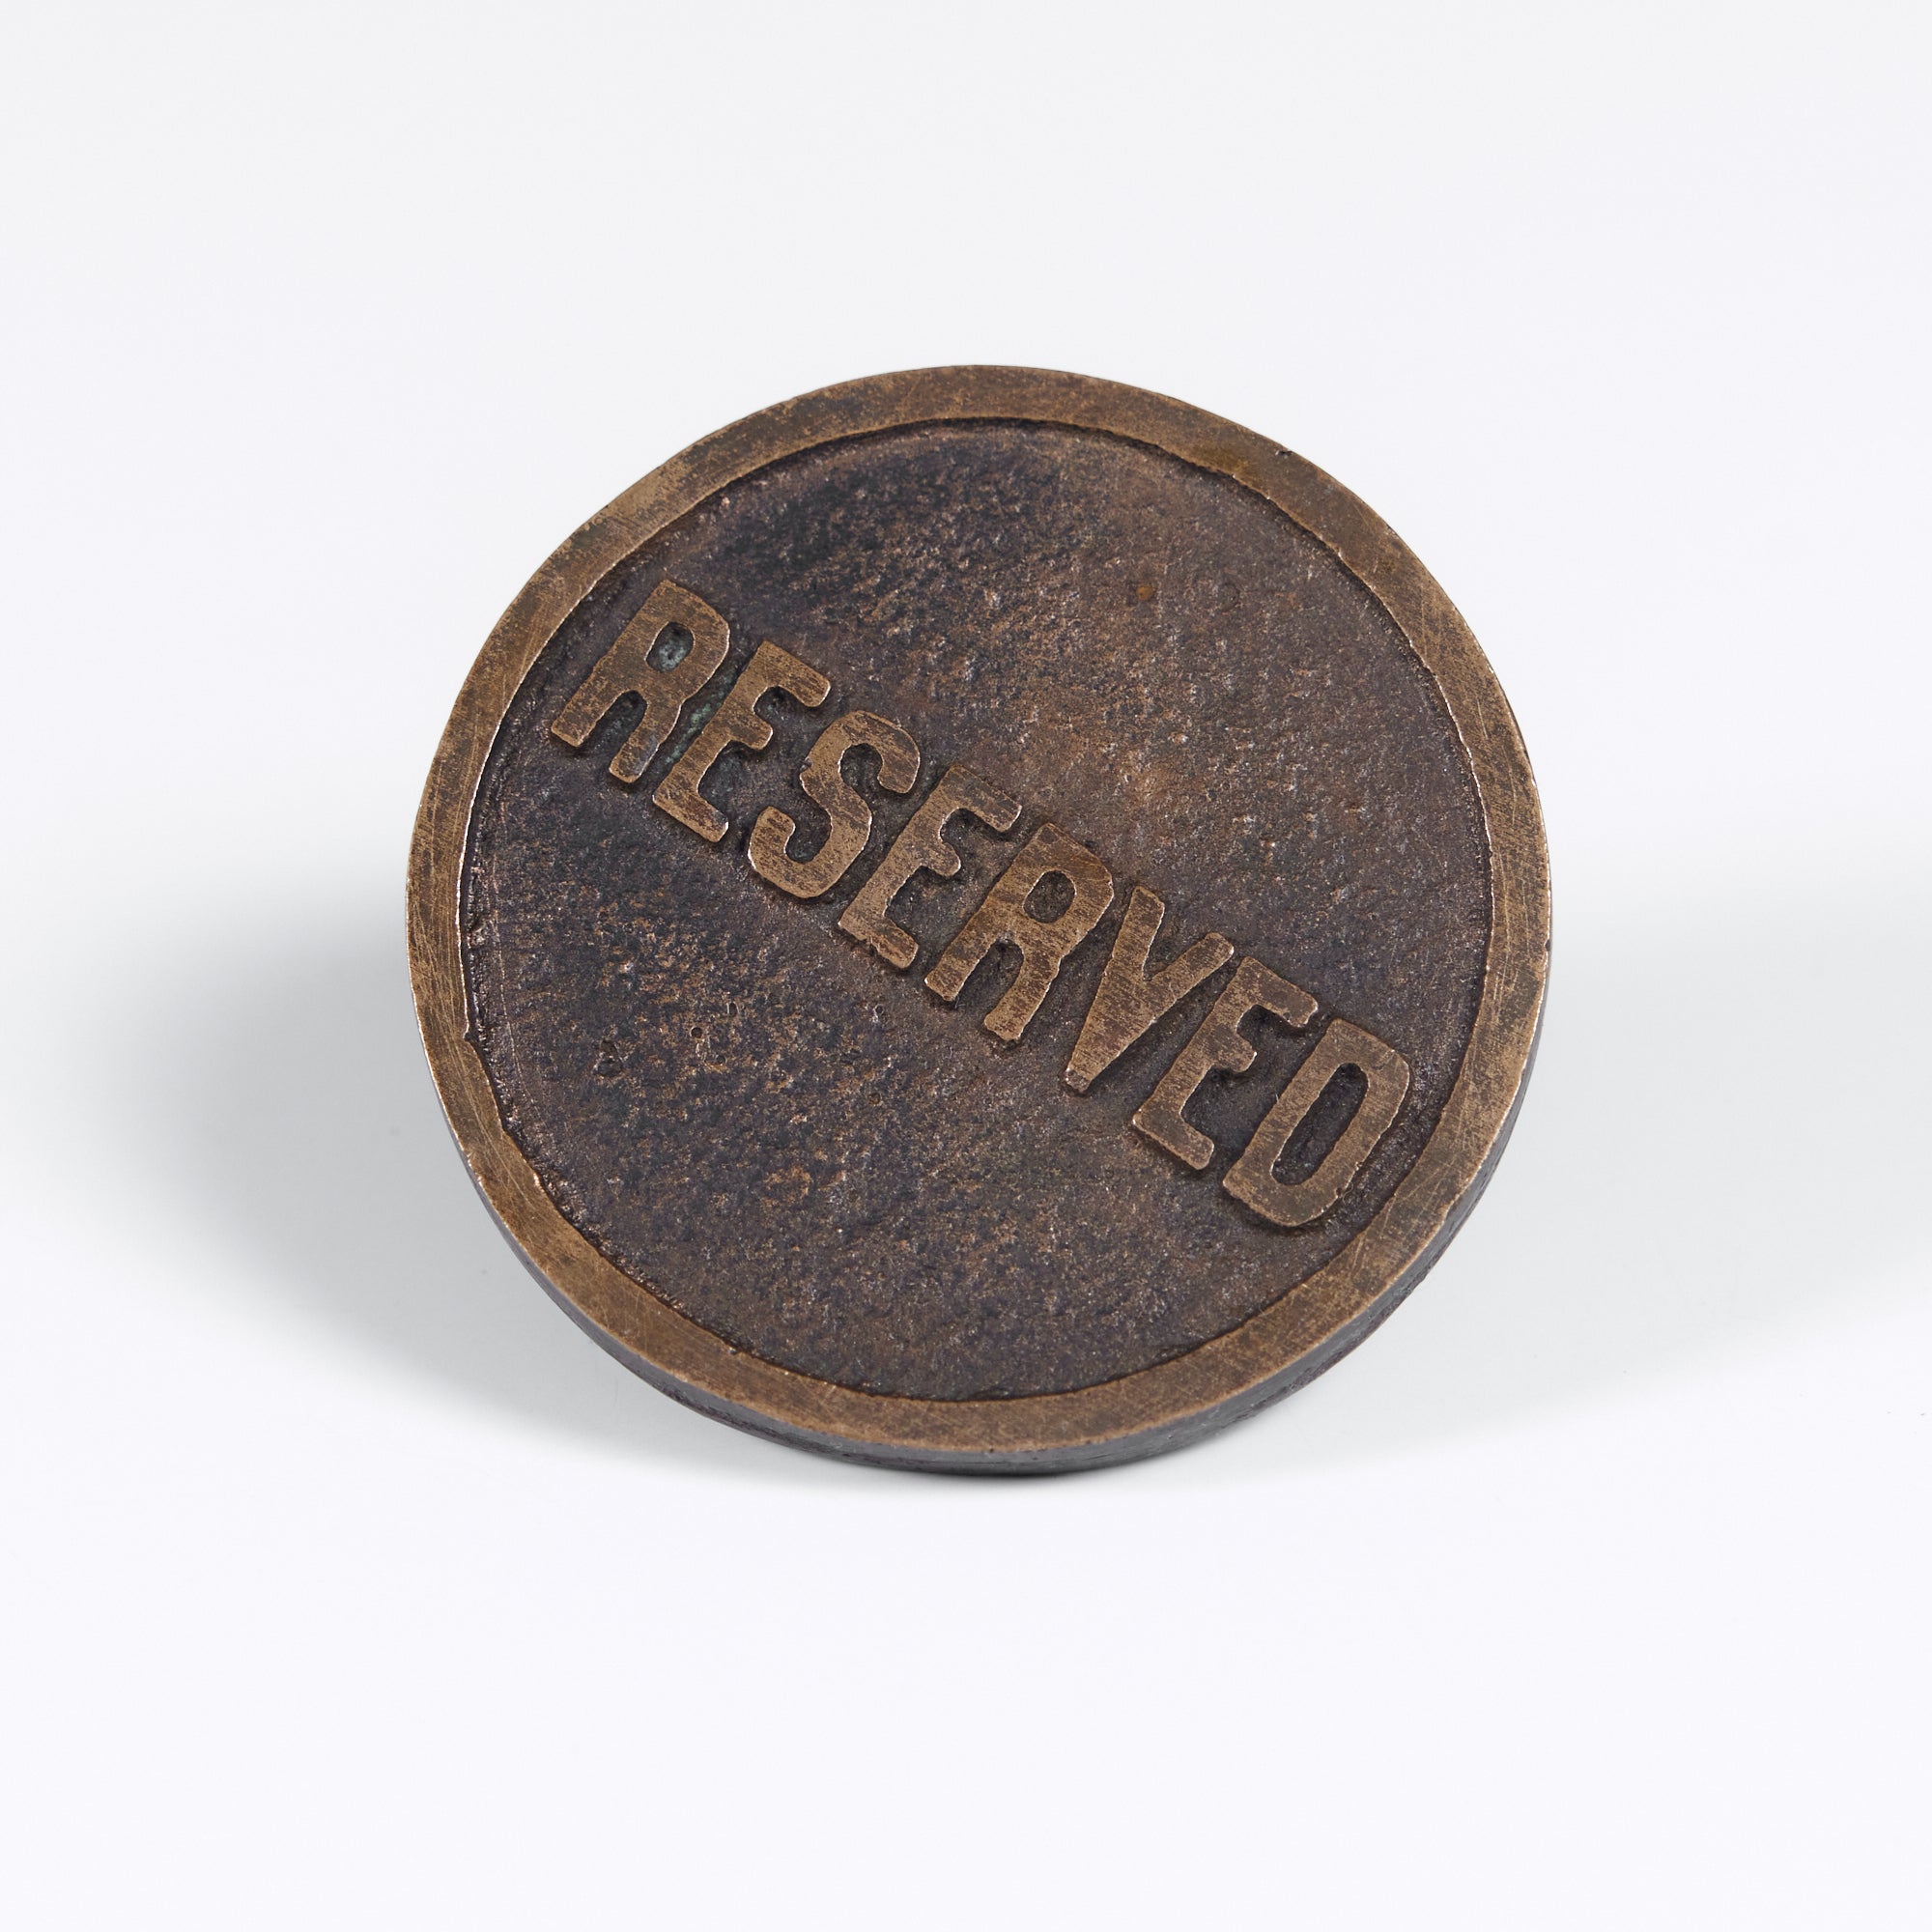 Brass "Reserved" Button